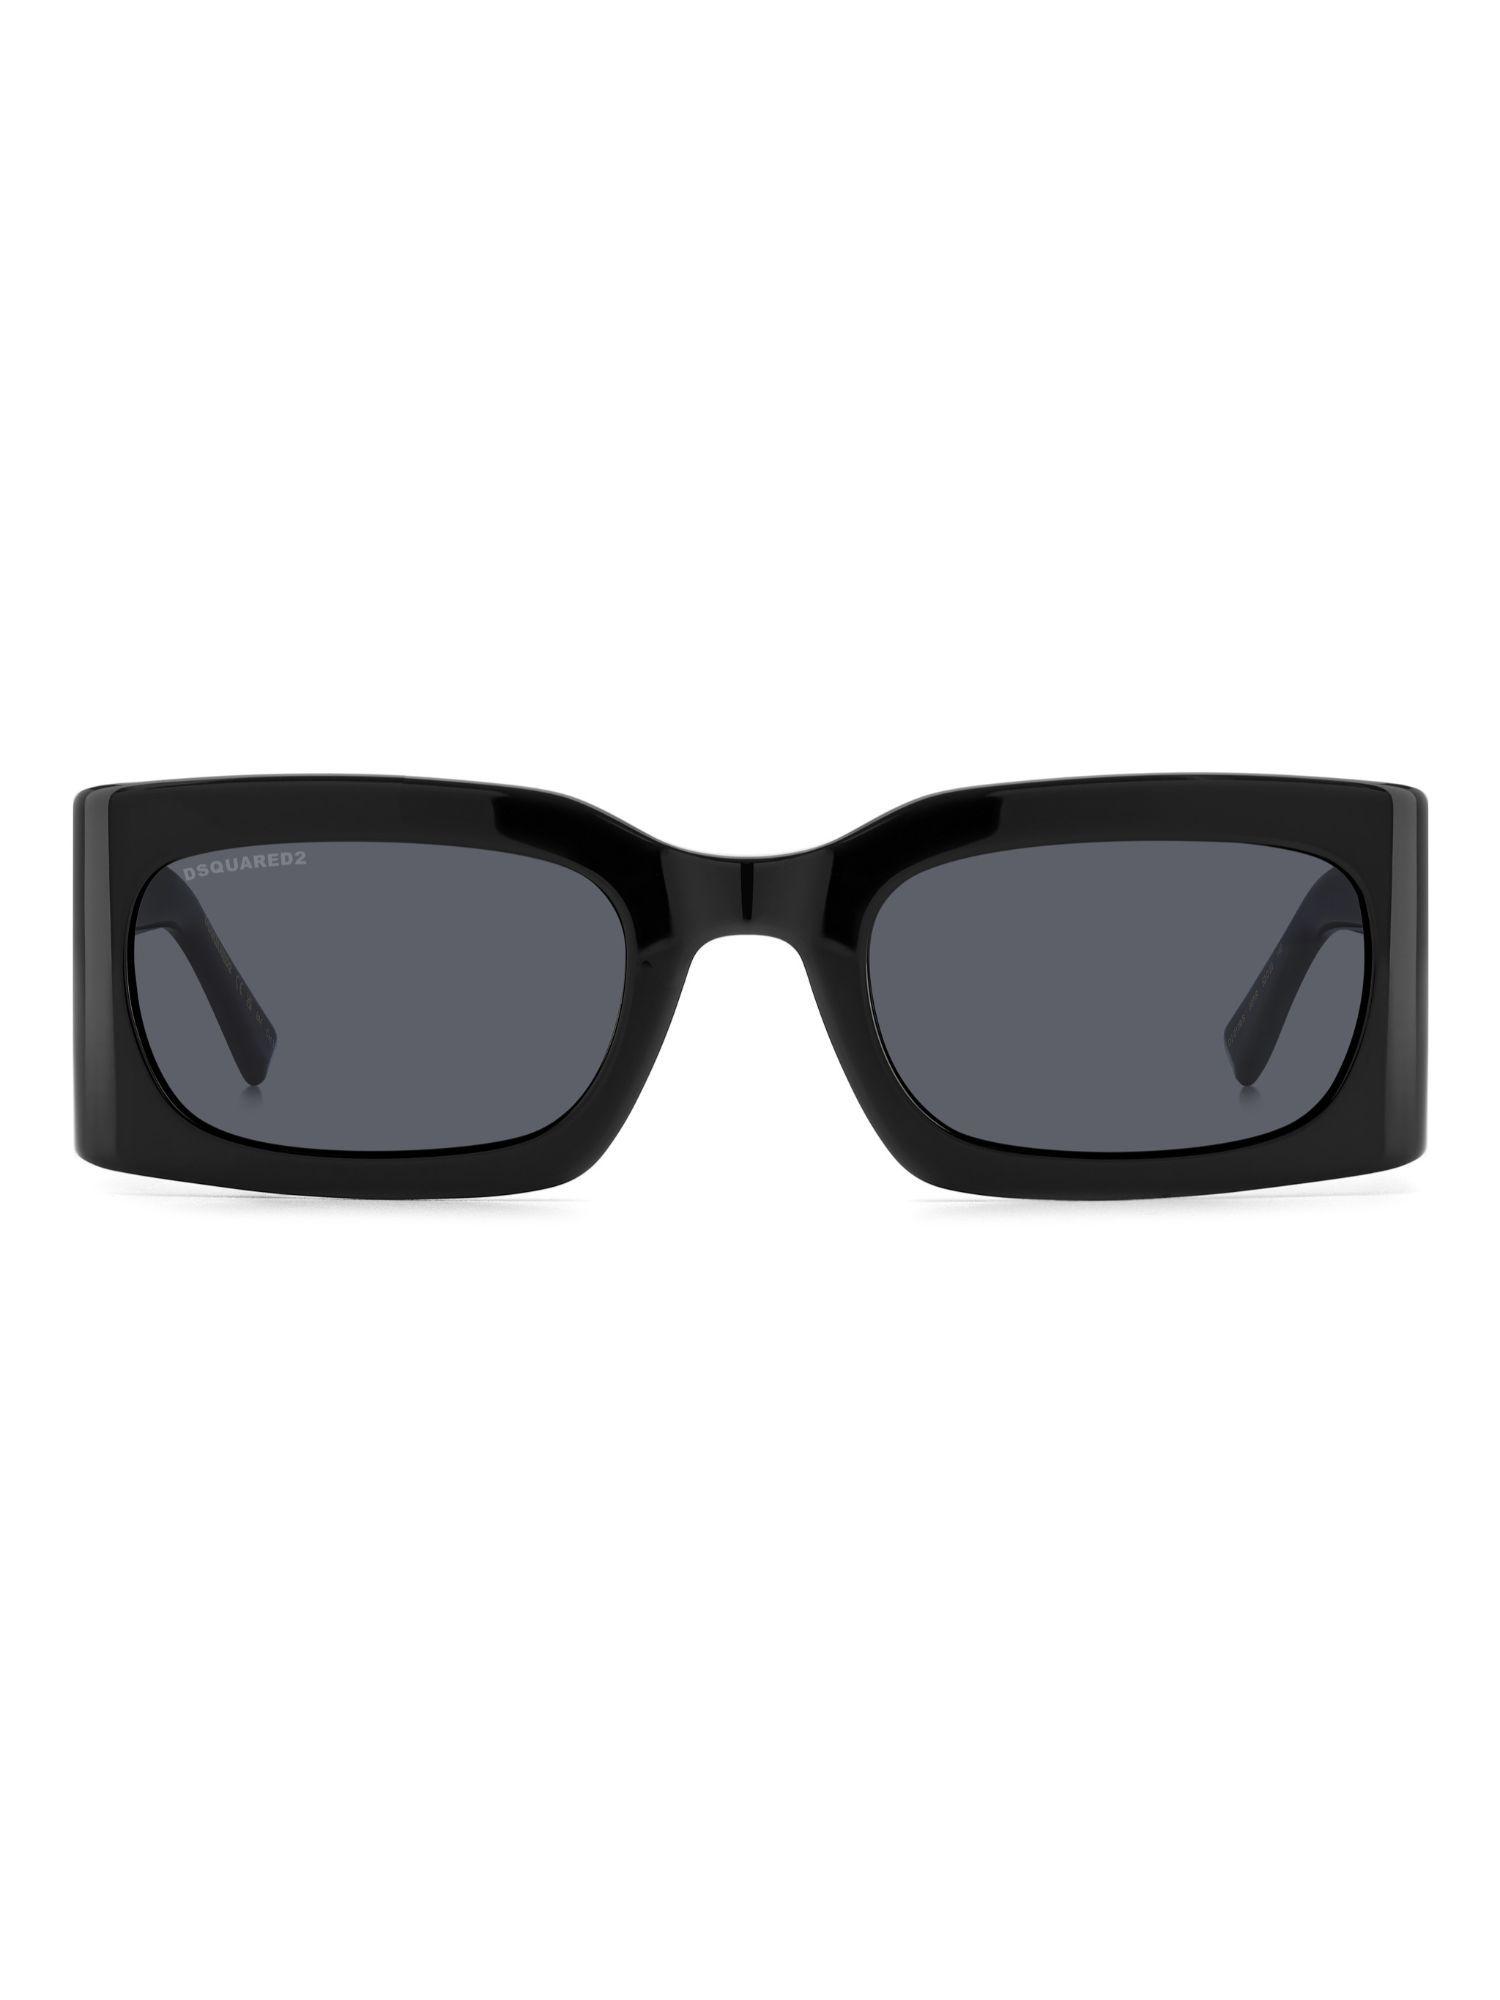 womens grey lens black rectangular sunglasses with 100% uv protection (52)